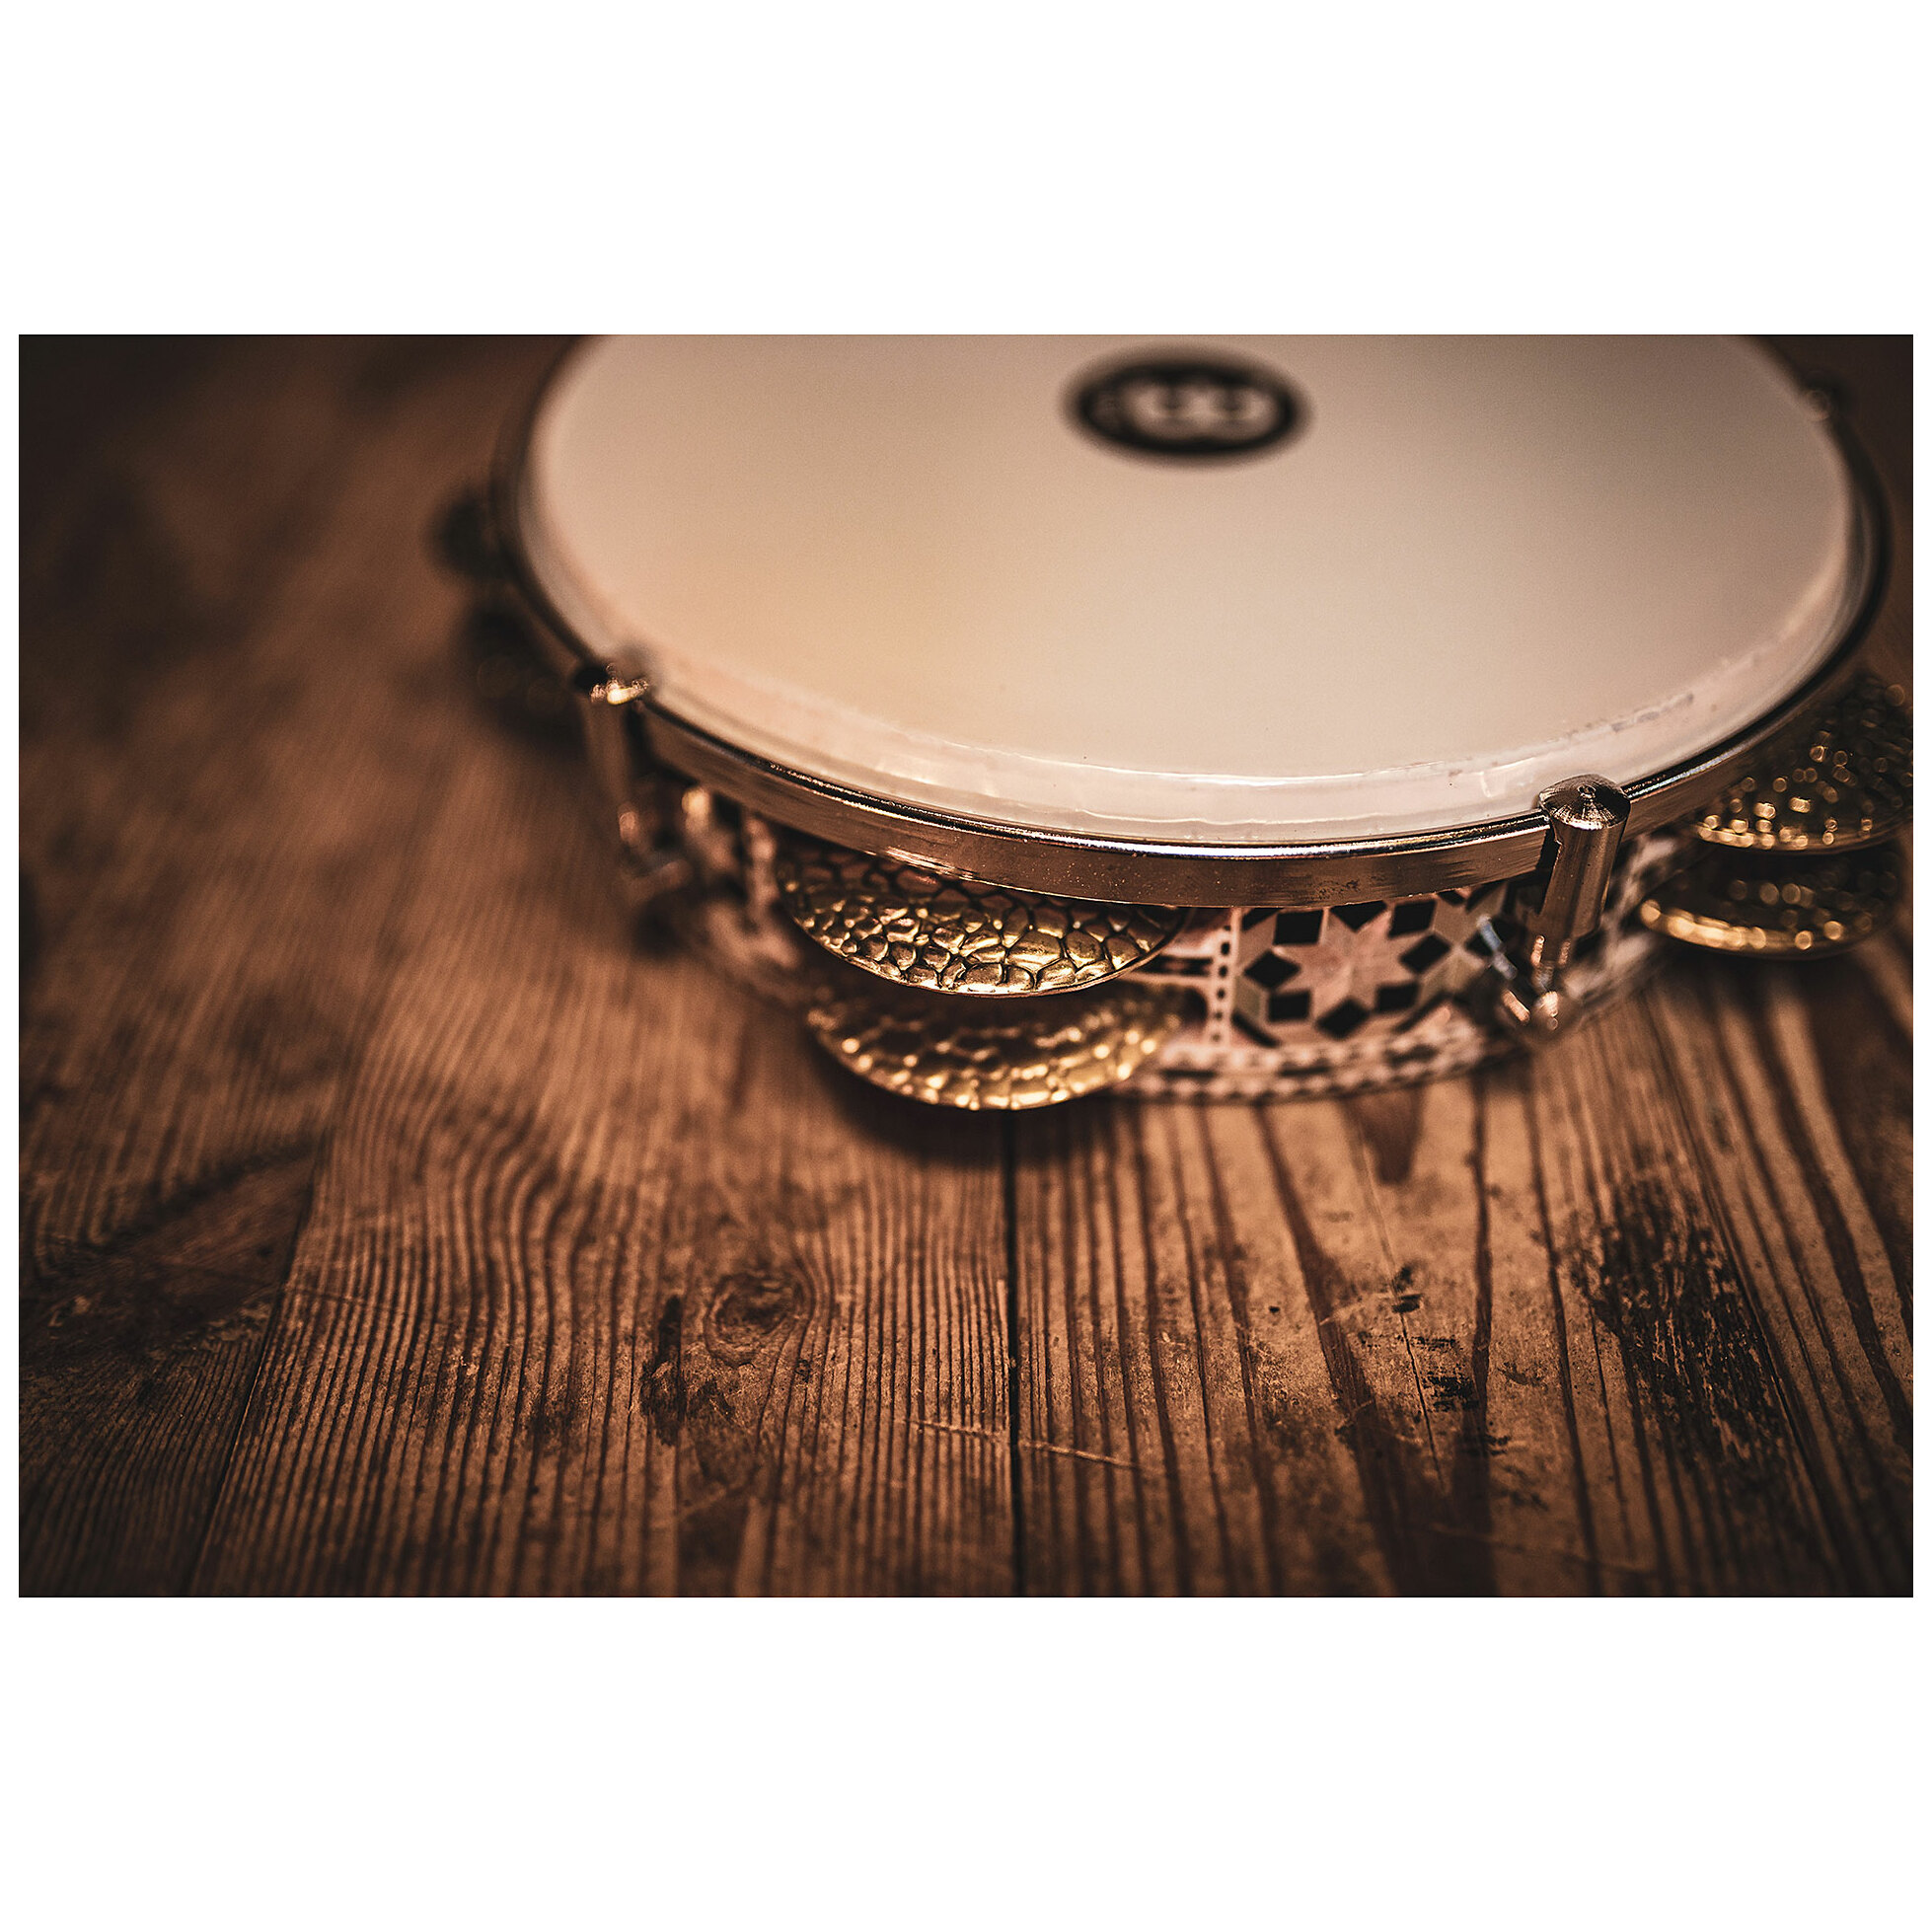 Meinl Percussion AERIQ1 - Artisan Edition Riq Drum - 8 3/4" White Pearl, Mosaic Royale 5